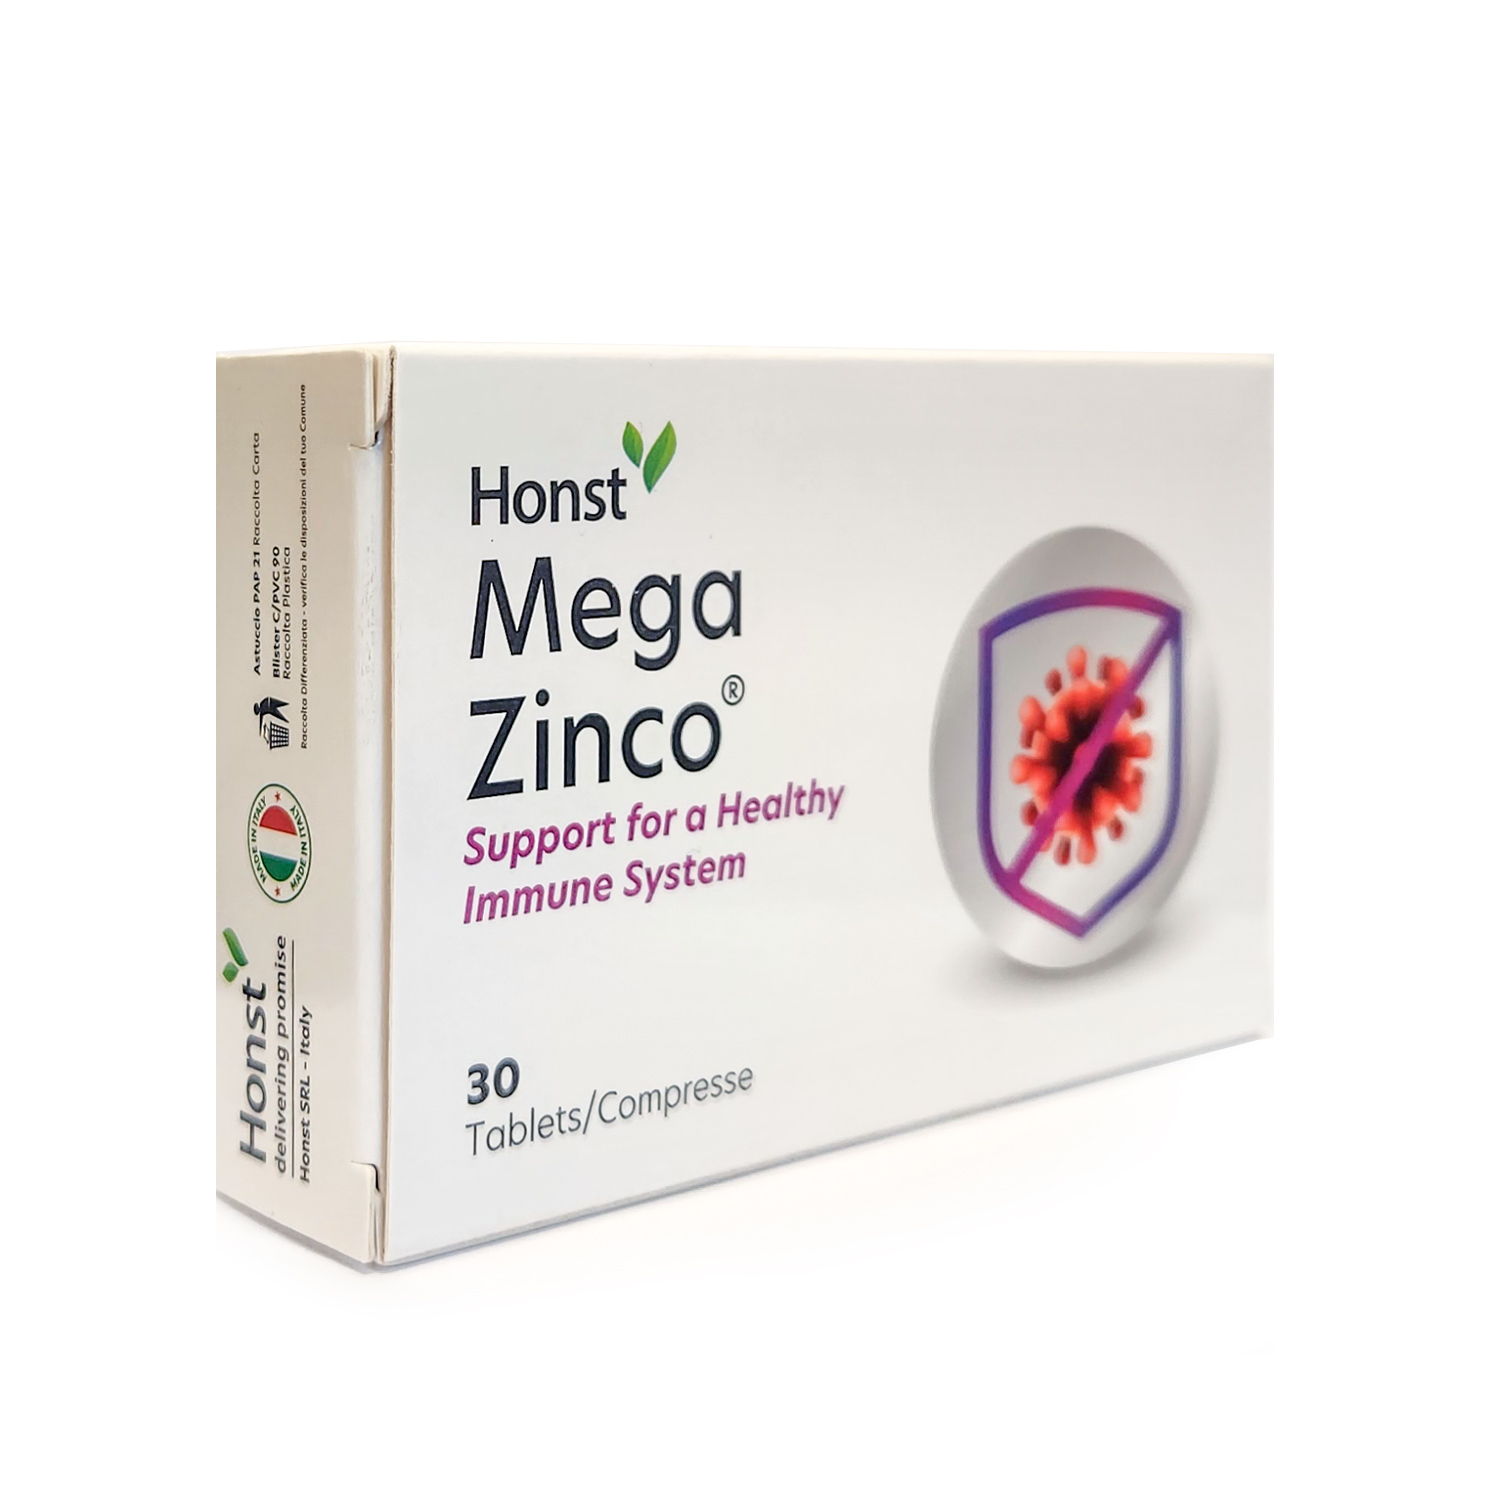 Mega Zinco 30 Tablets/Compresse